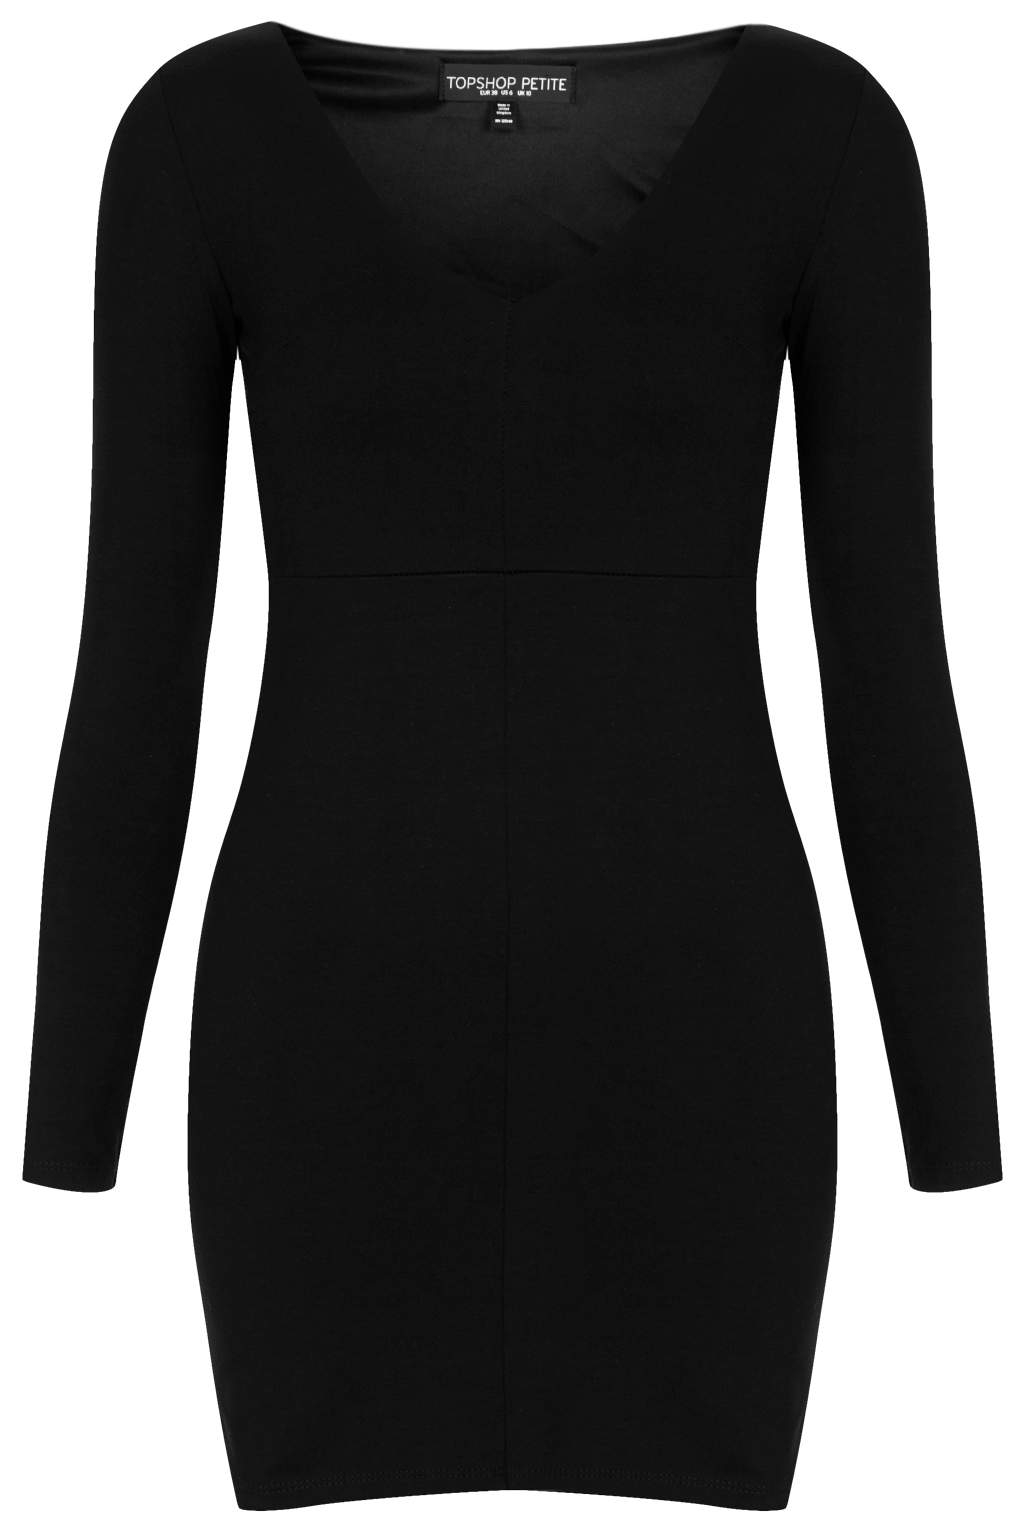 topshop black dress sale